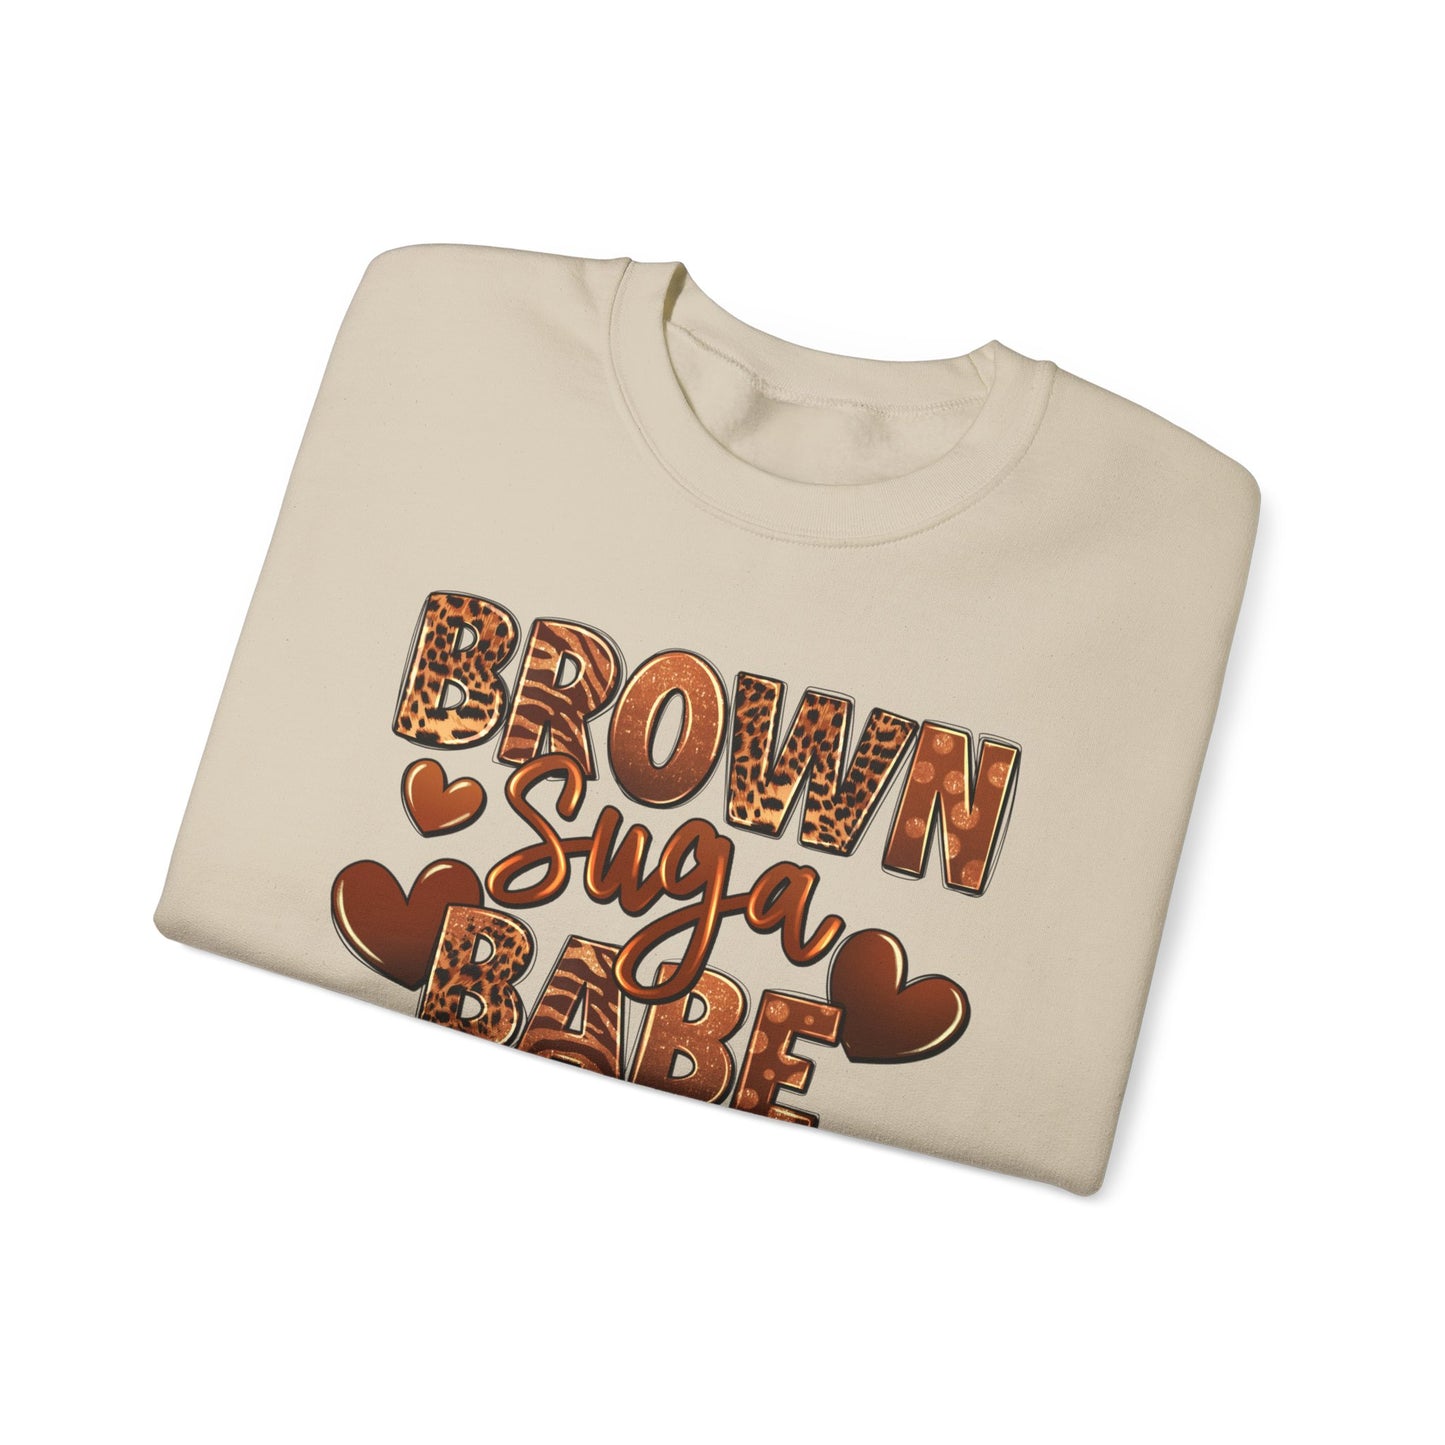 Brown Suga Babe Crewneck Sweatshirt